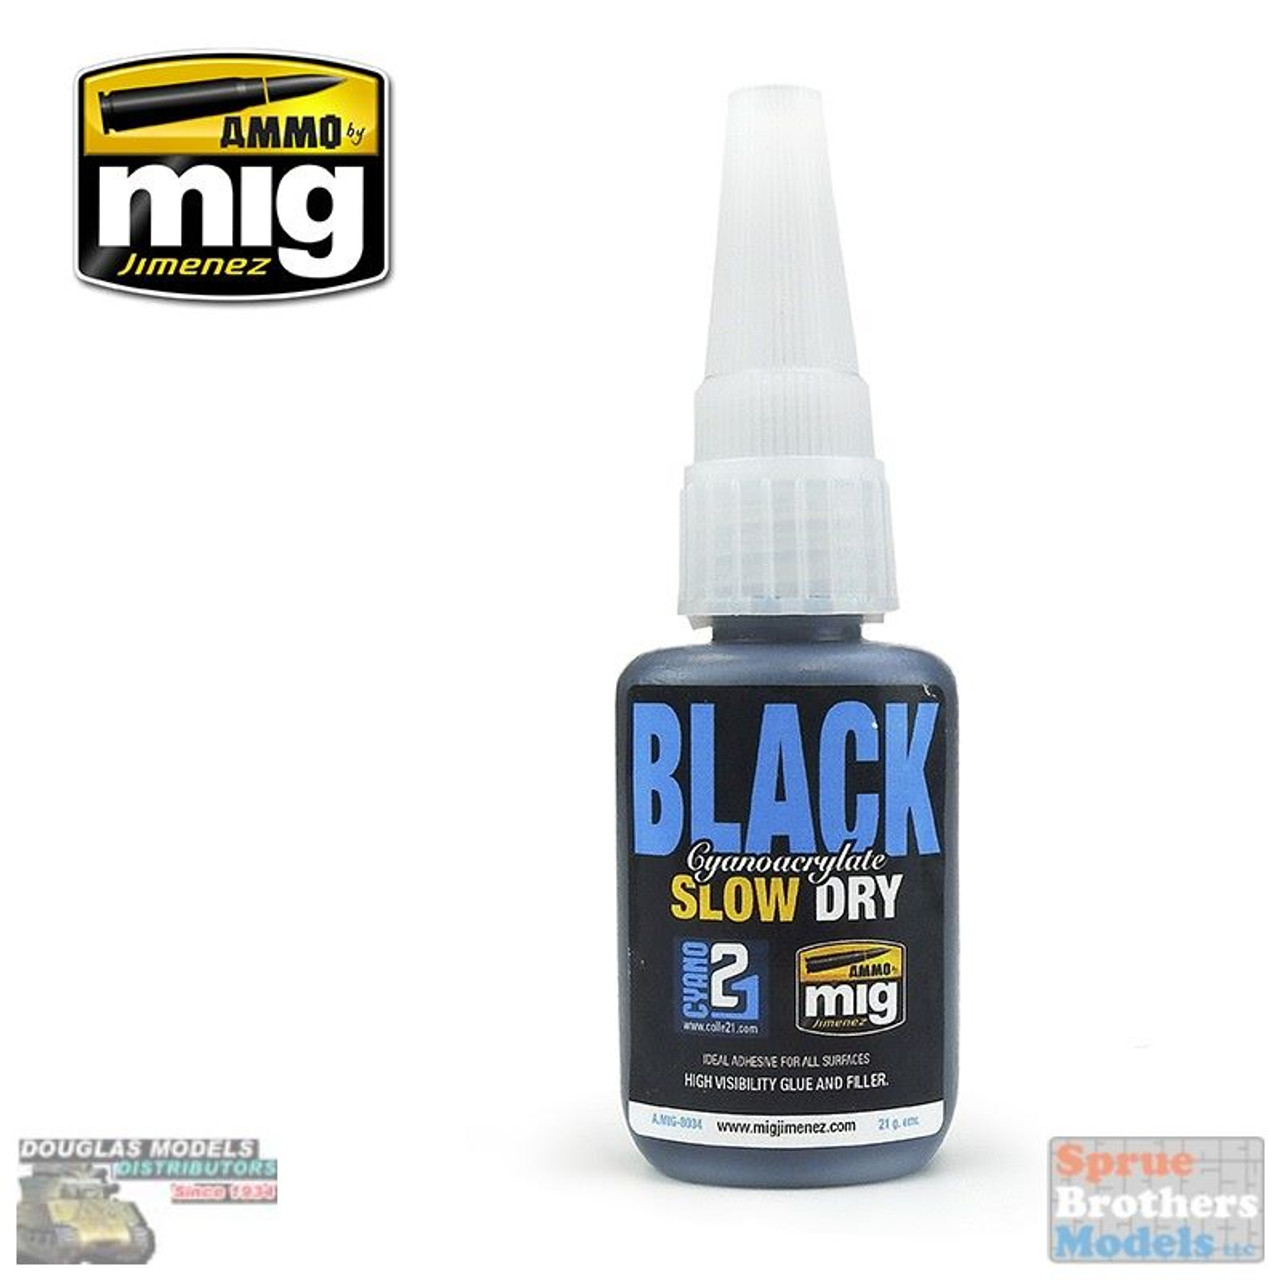 Kit Super Glue 21 Cyanoacrylate Anaerobie + Black Bottle 21gr